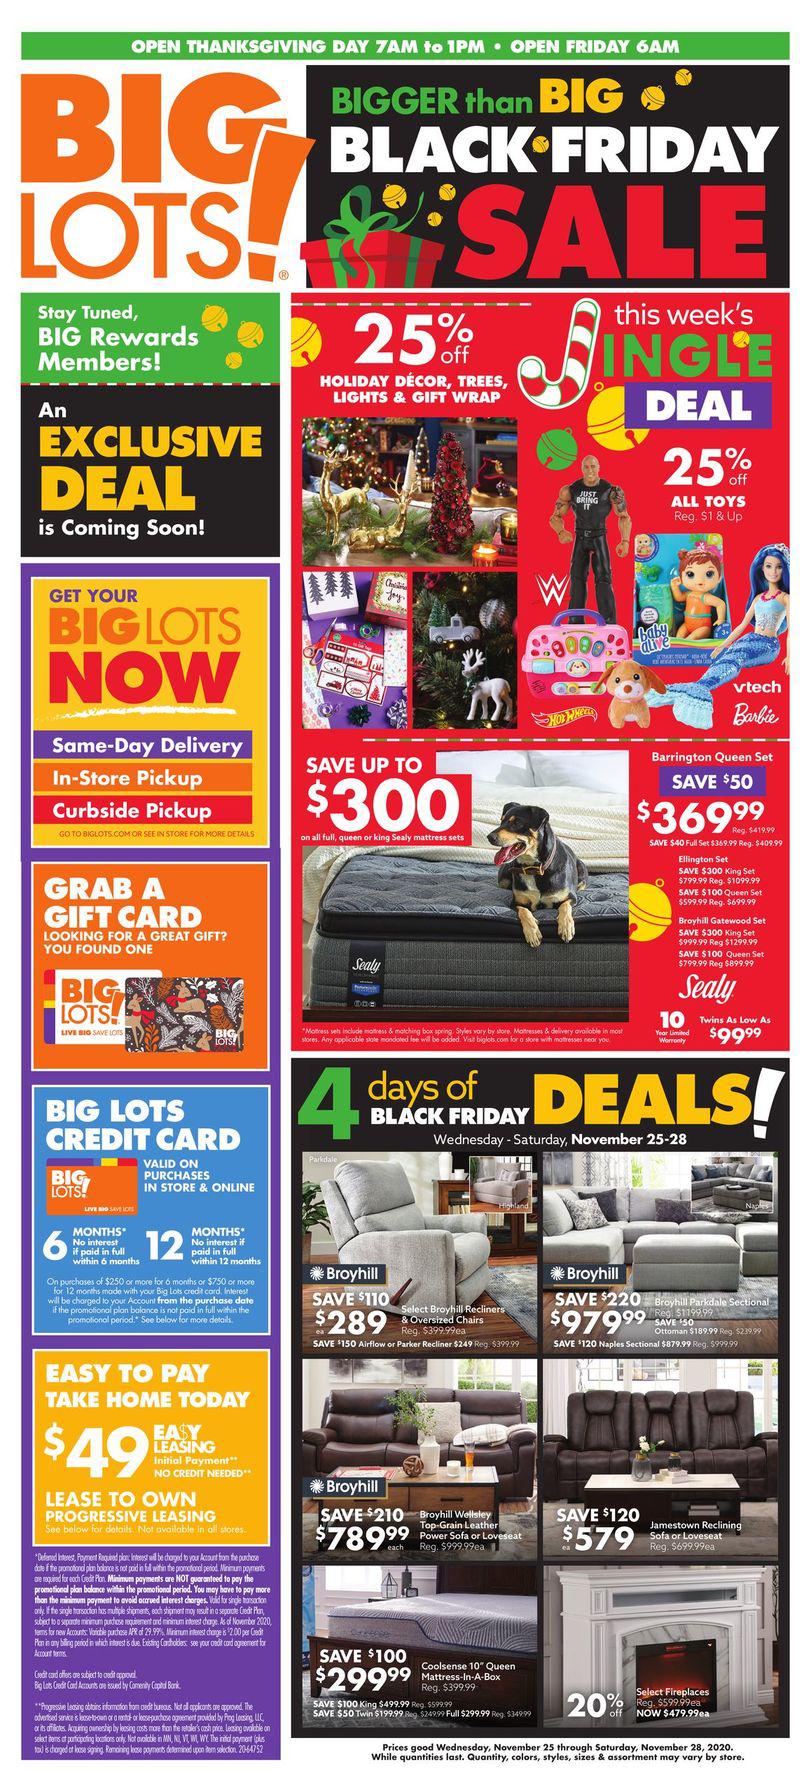 Big Lots Black Friday Sale Ad 2021 - When Black Friday Deals Start 2021